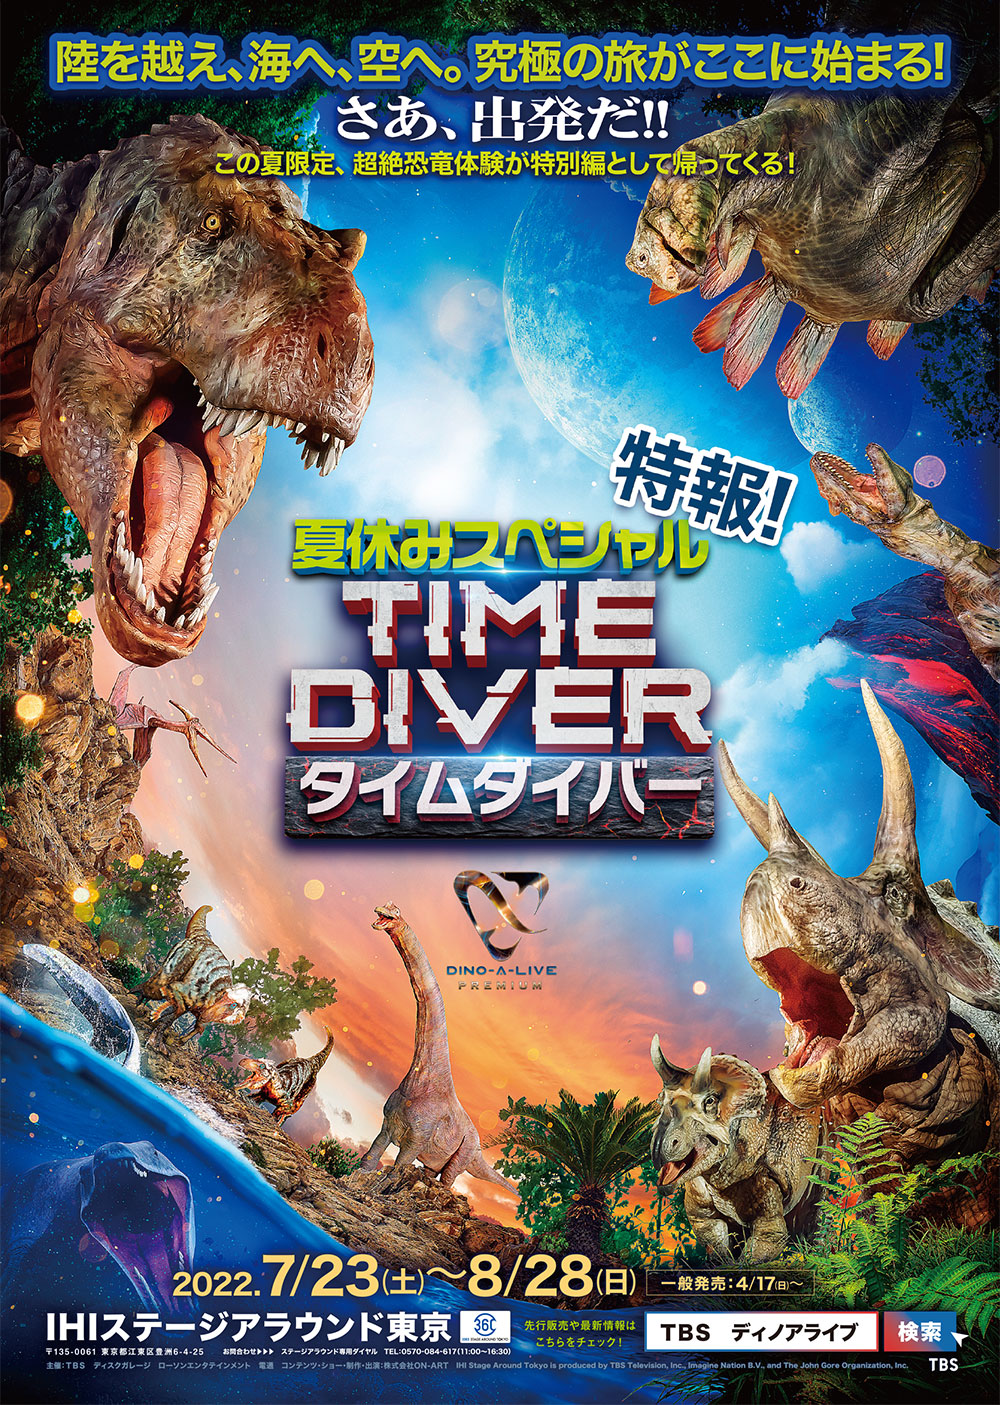 IHI Stage Around Tokyo現舉行暑假版「Dino Alive Premium Time Diver」。 網上圖片